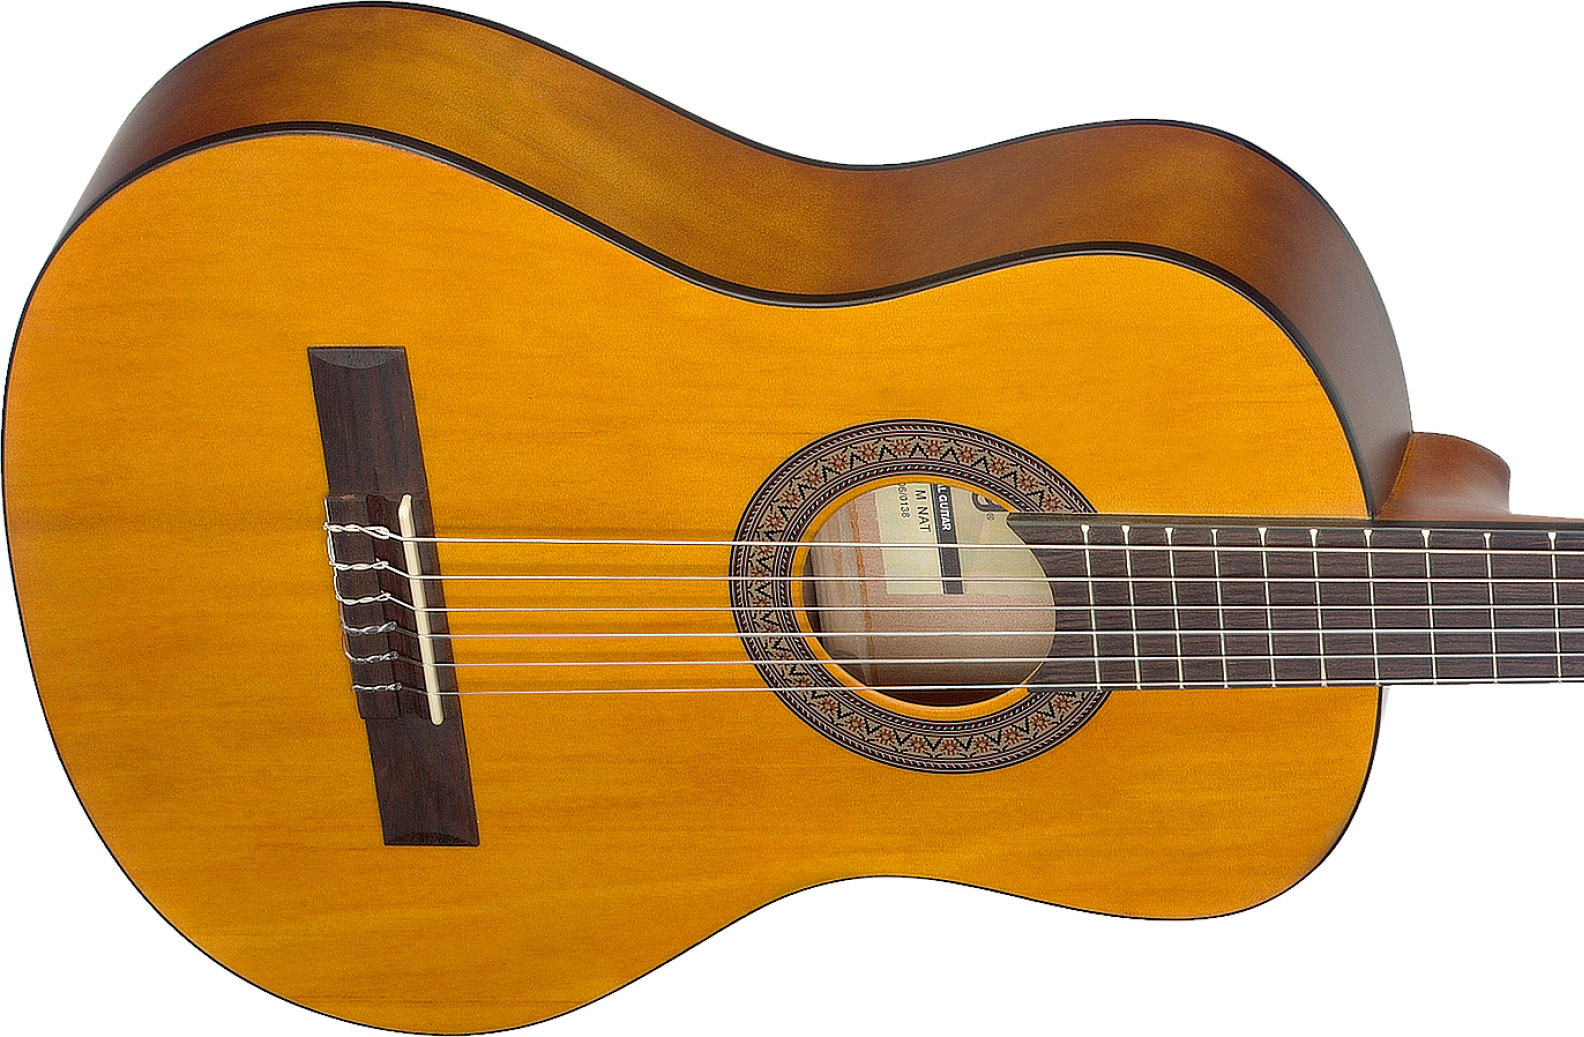 Stagg C410 1/2 Tilleul - Natural - Guitare Classique Format 1/2 - Variation 1